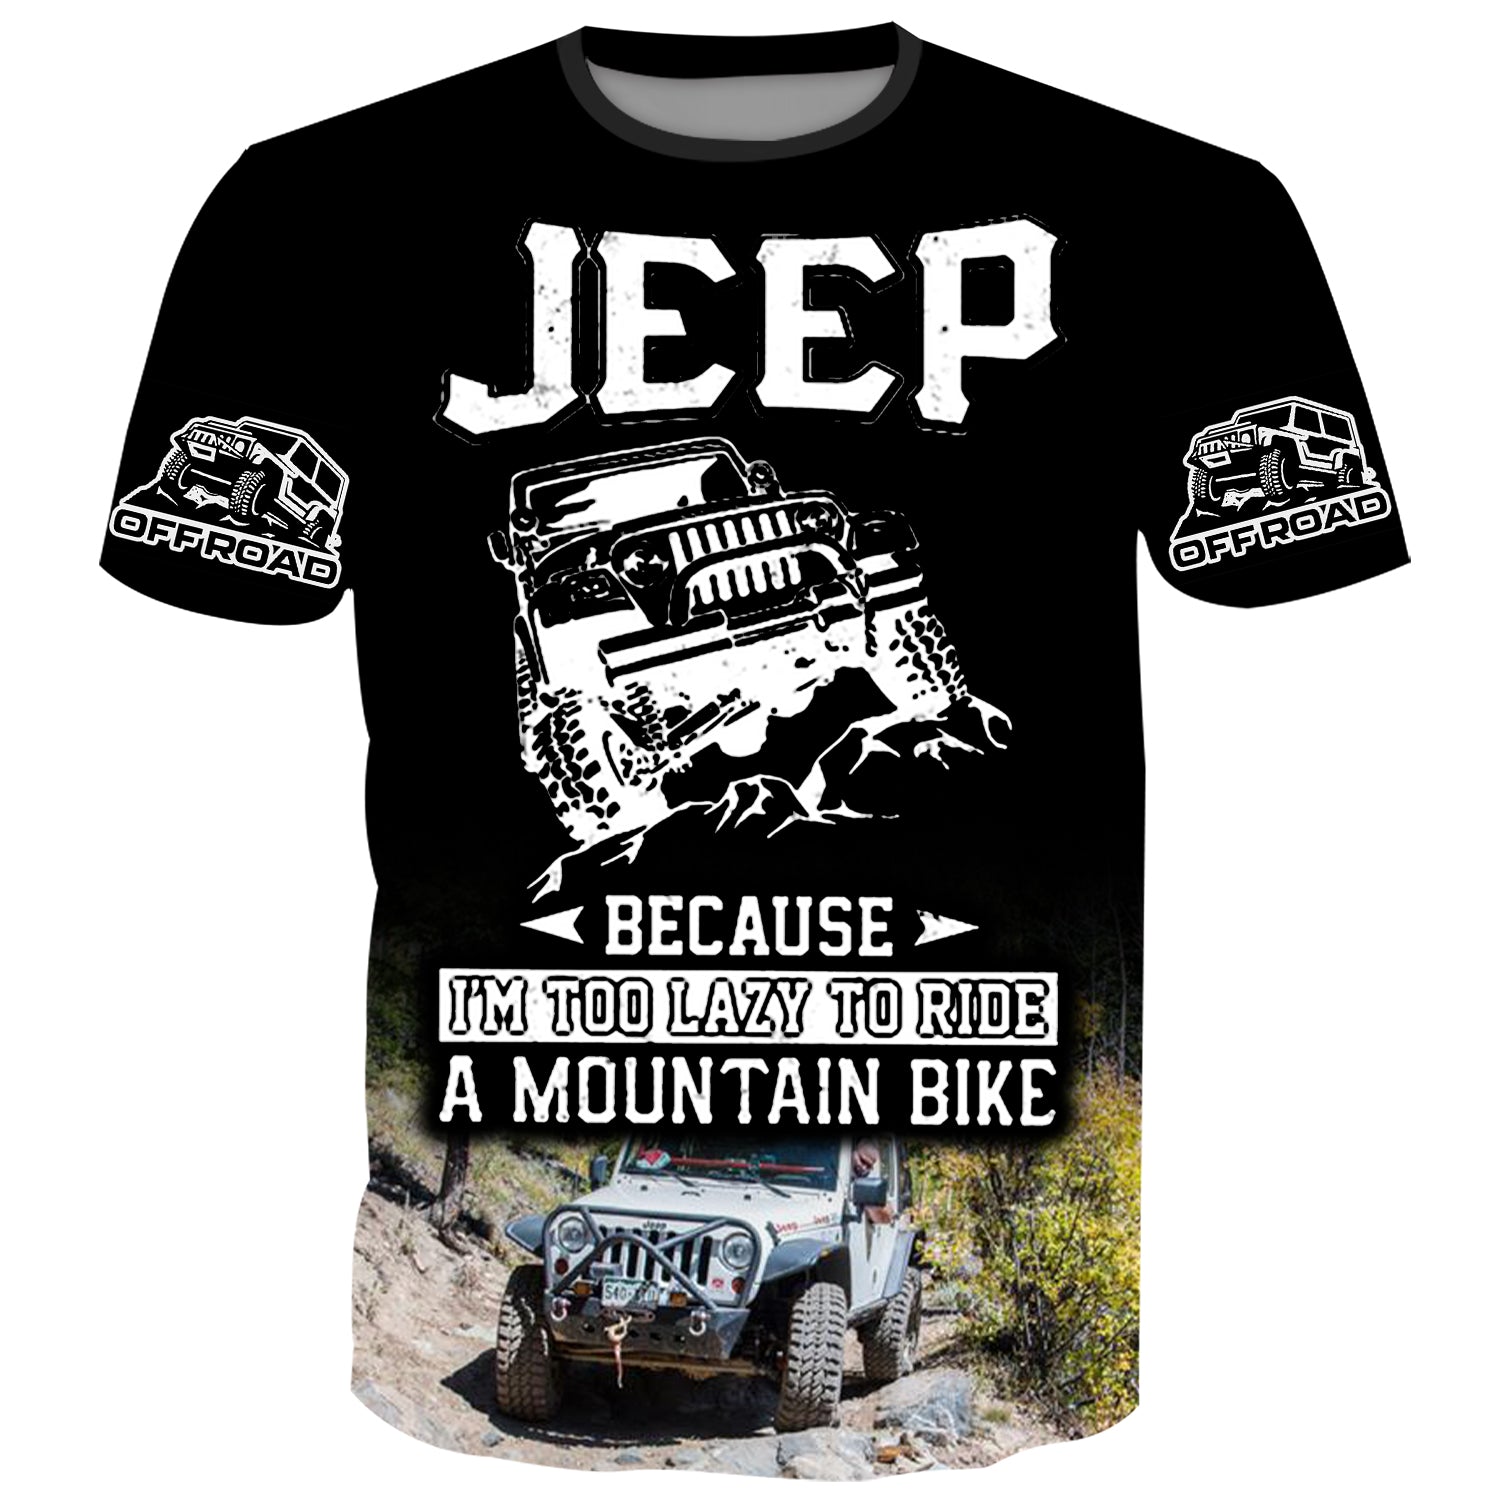 Jeep because I'm too lazy to ride a mountain bike - T-Shirt